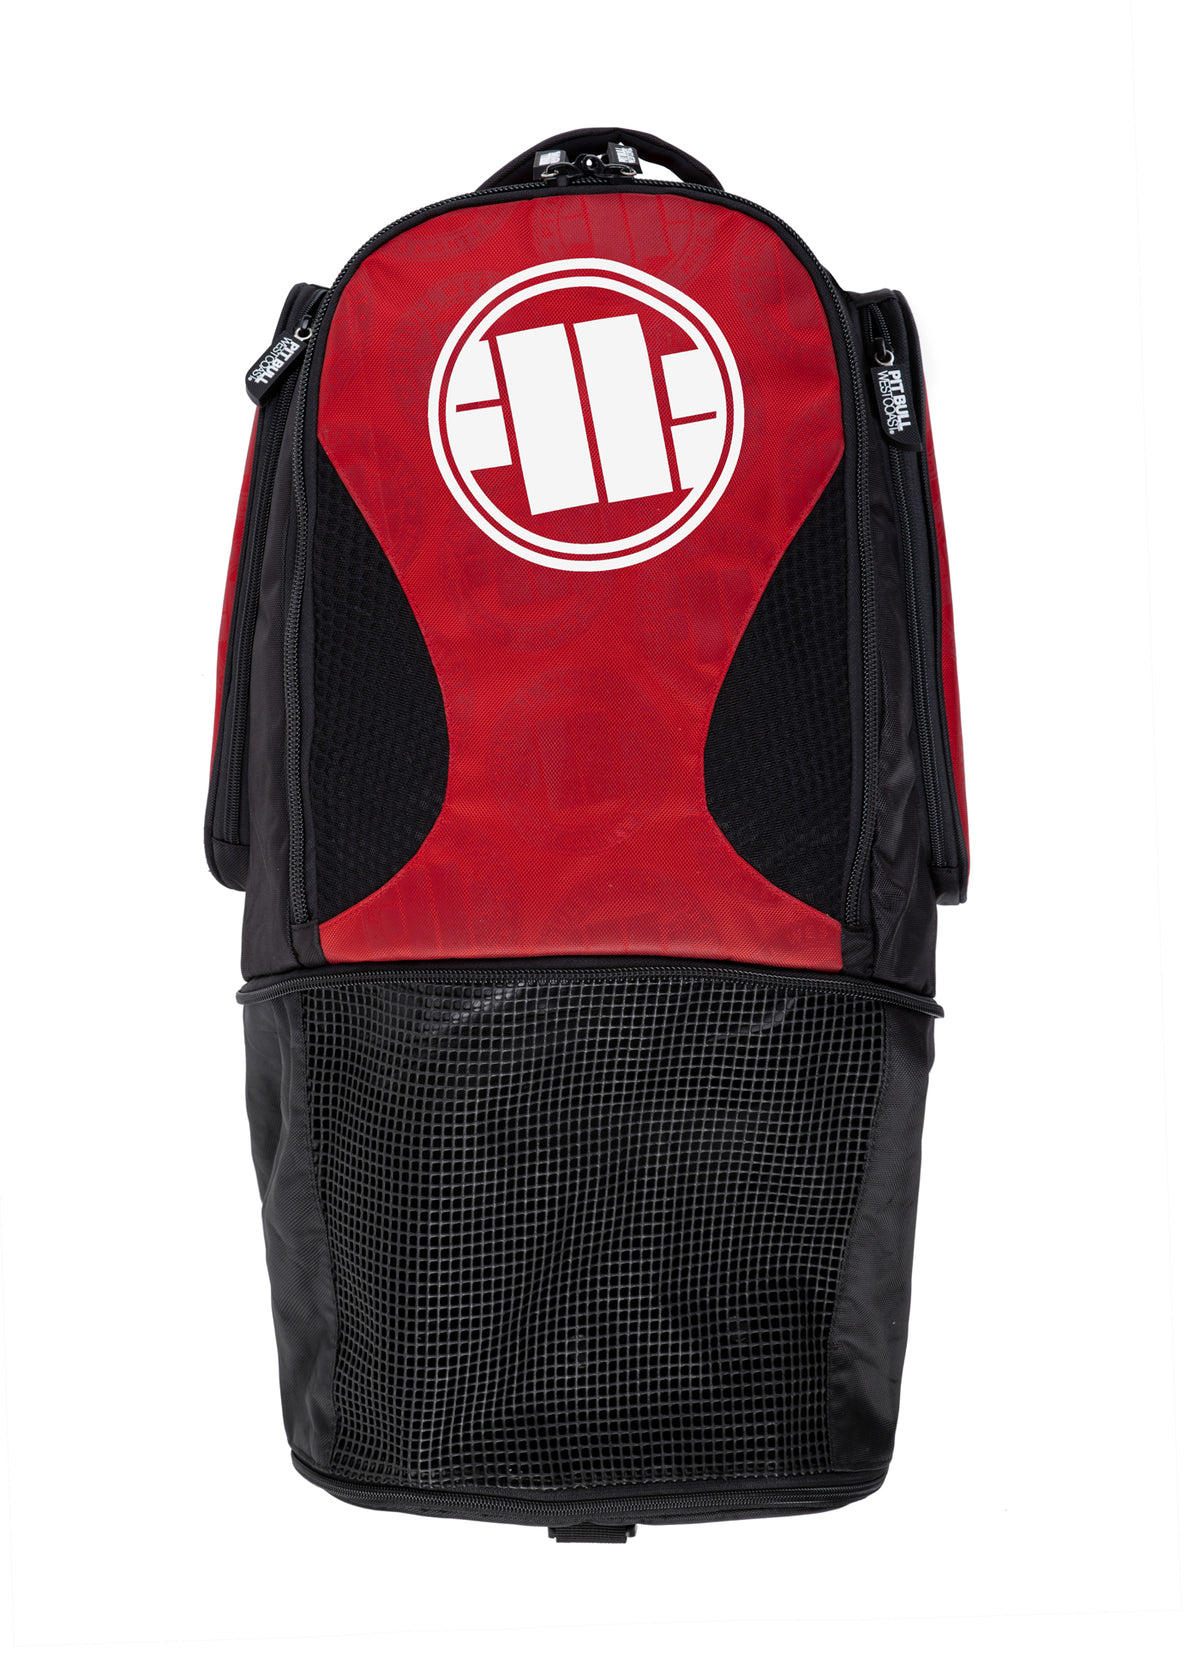 LOGO Medium Red Training Backpack.